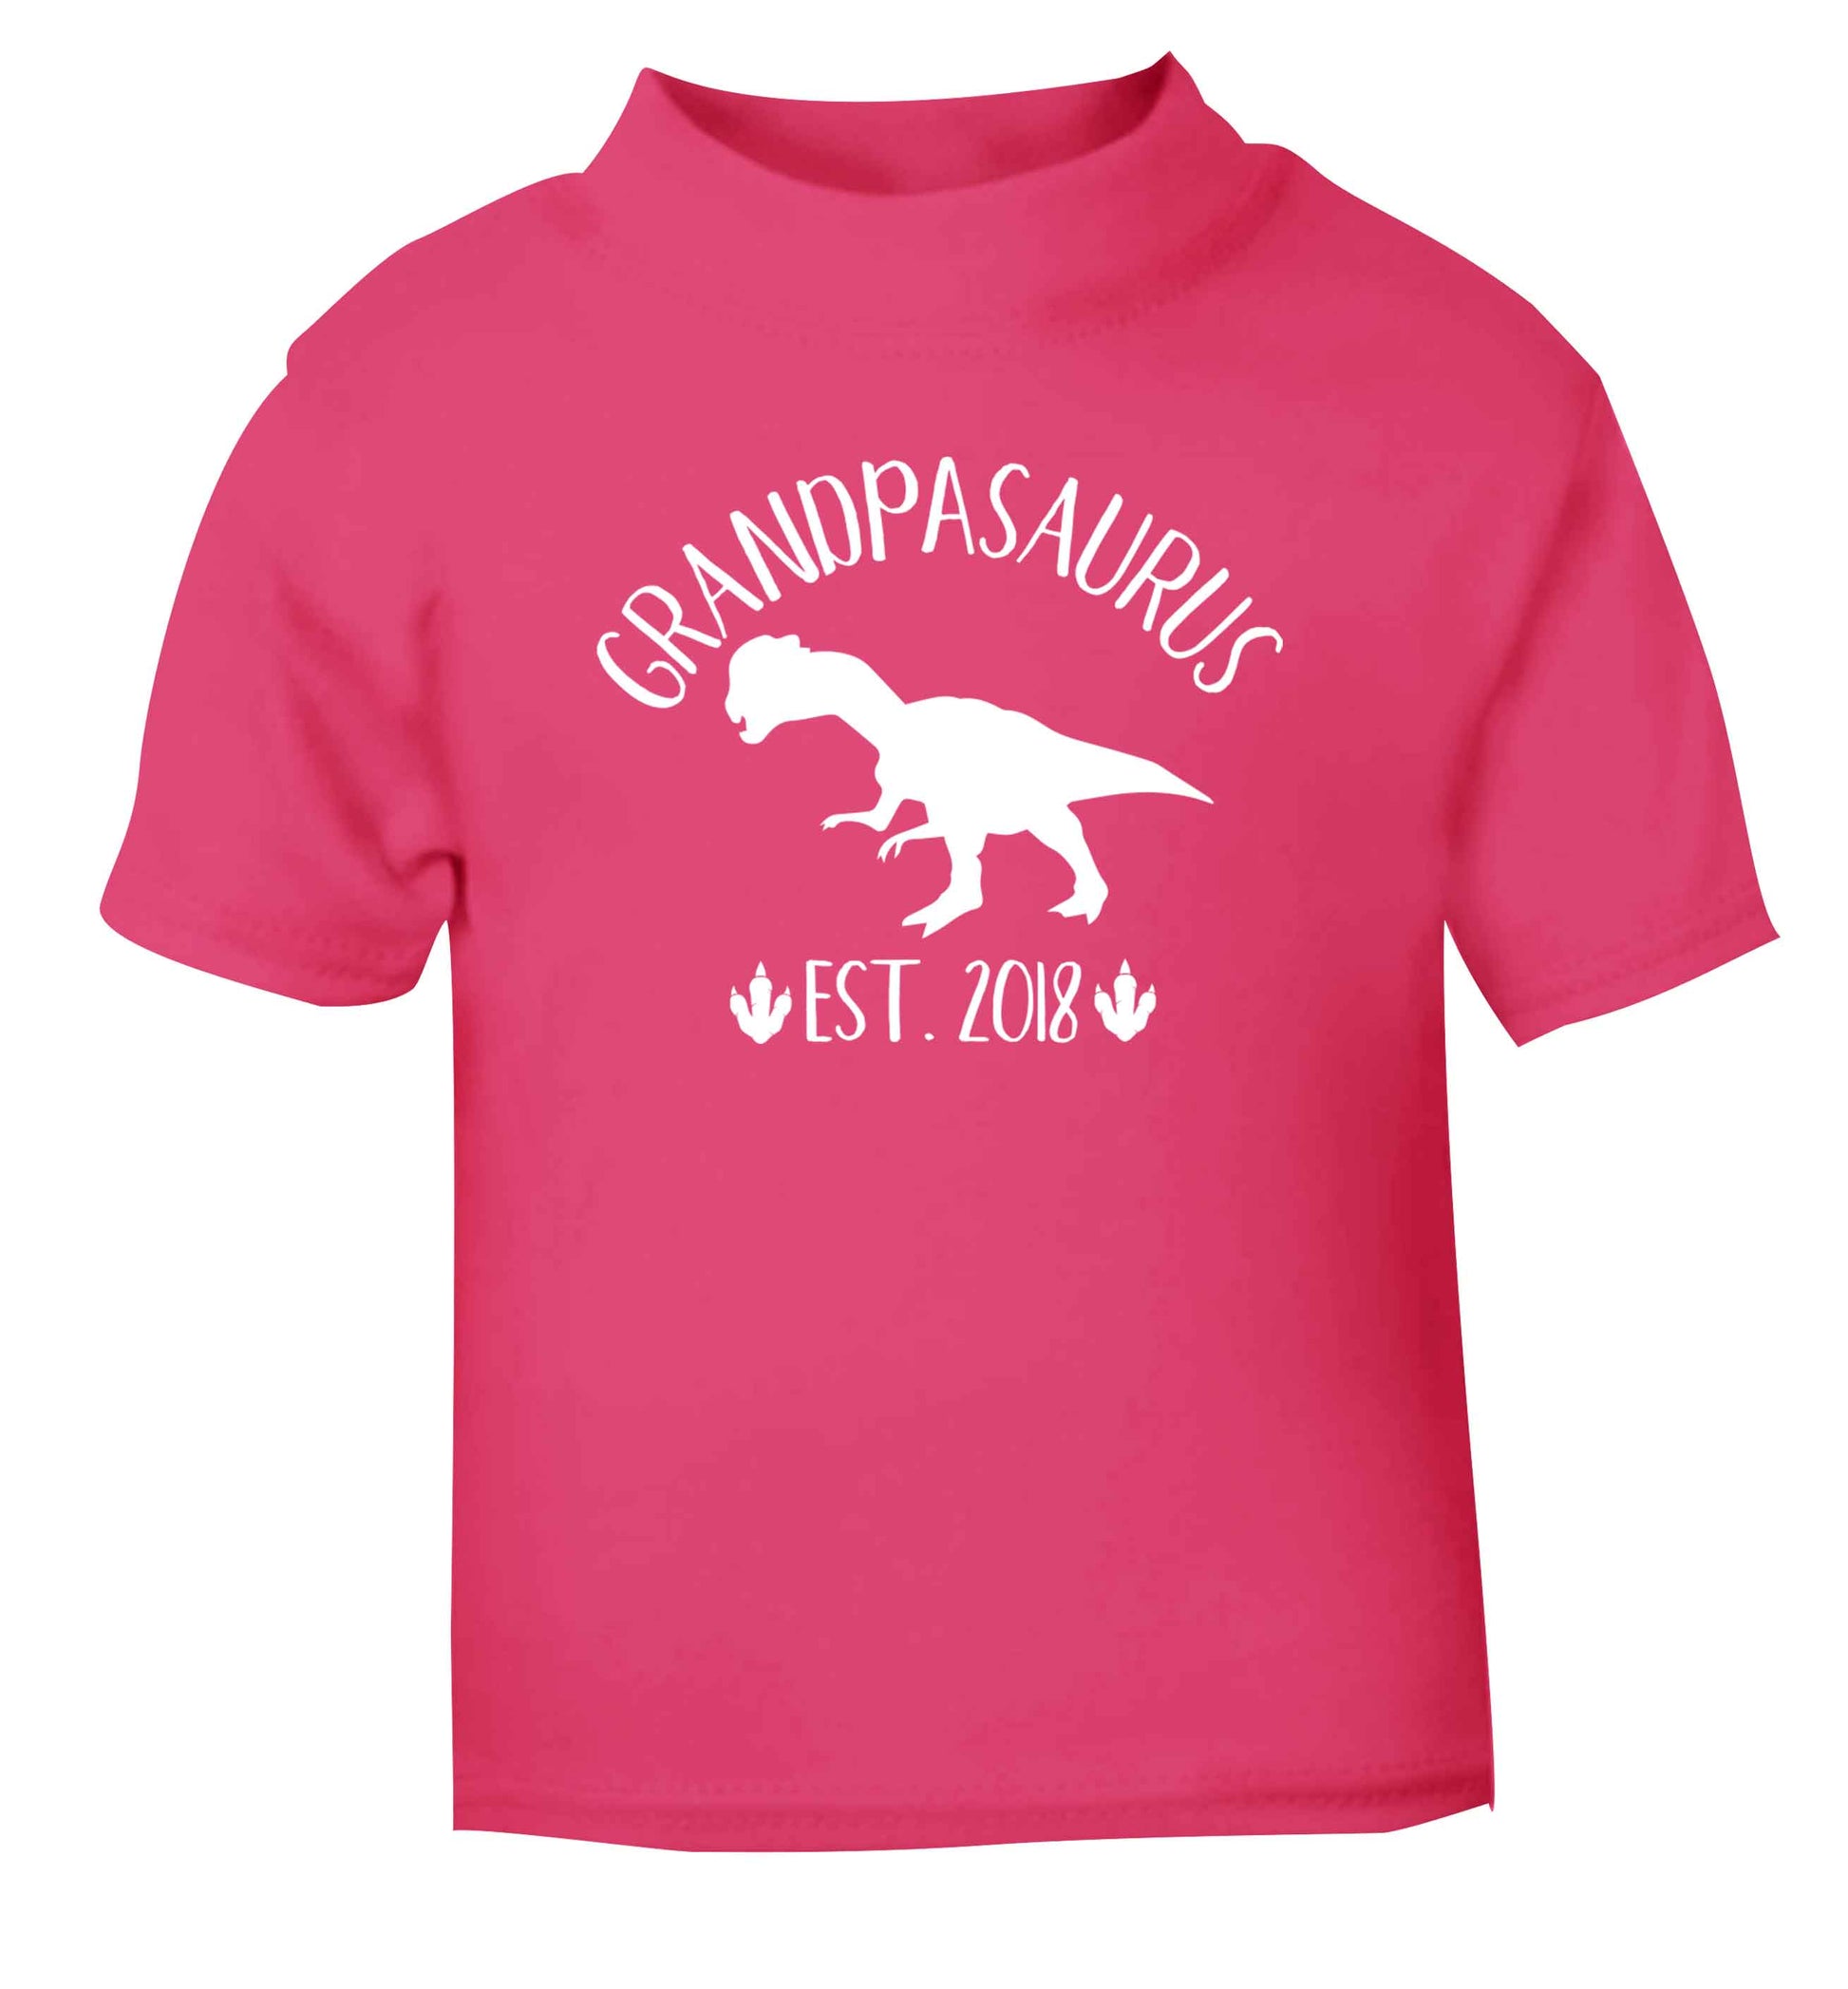 Personalised grandpasaurus since (custom date) pink Baby Toddler Tshirt 2 Years